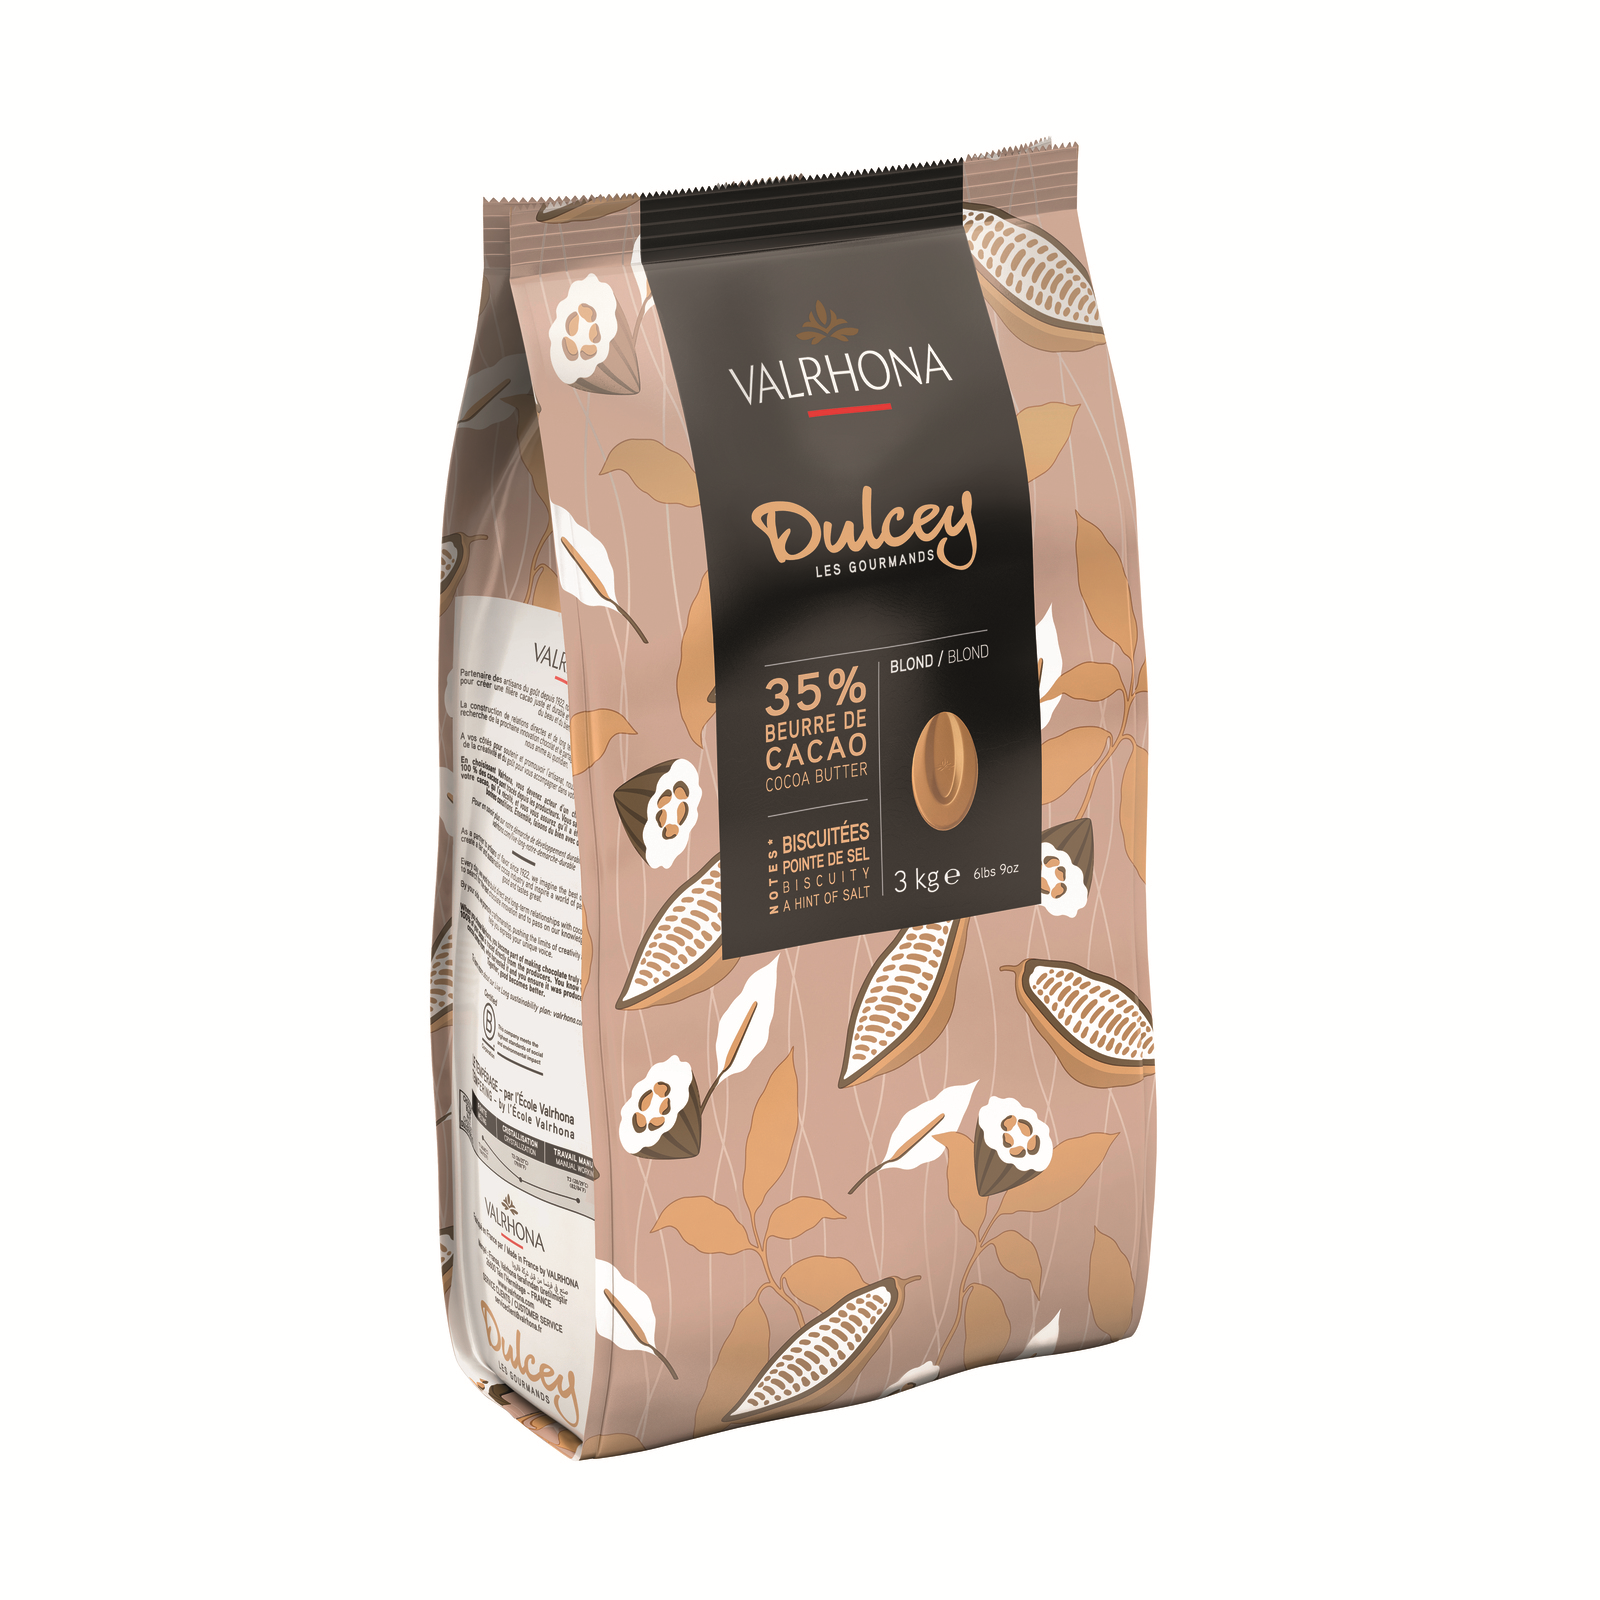 Valrhona Pioneer Blond Chocolate; Dulcey 